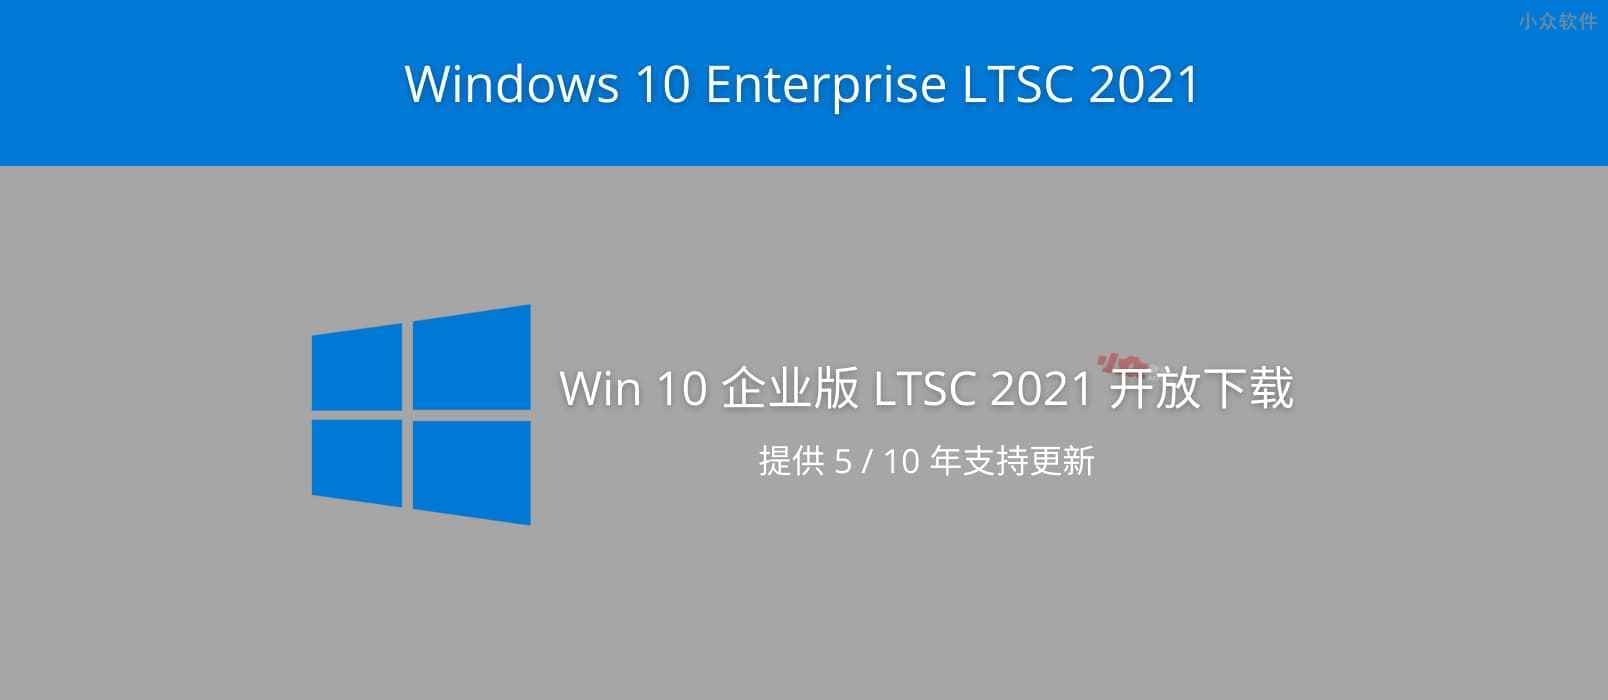 Windows 10 Enterprise LTSC 2021 下载地址发布，提供 5 年持续支持更新（Win10 企业版长期支持渠道 2021）